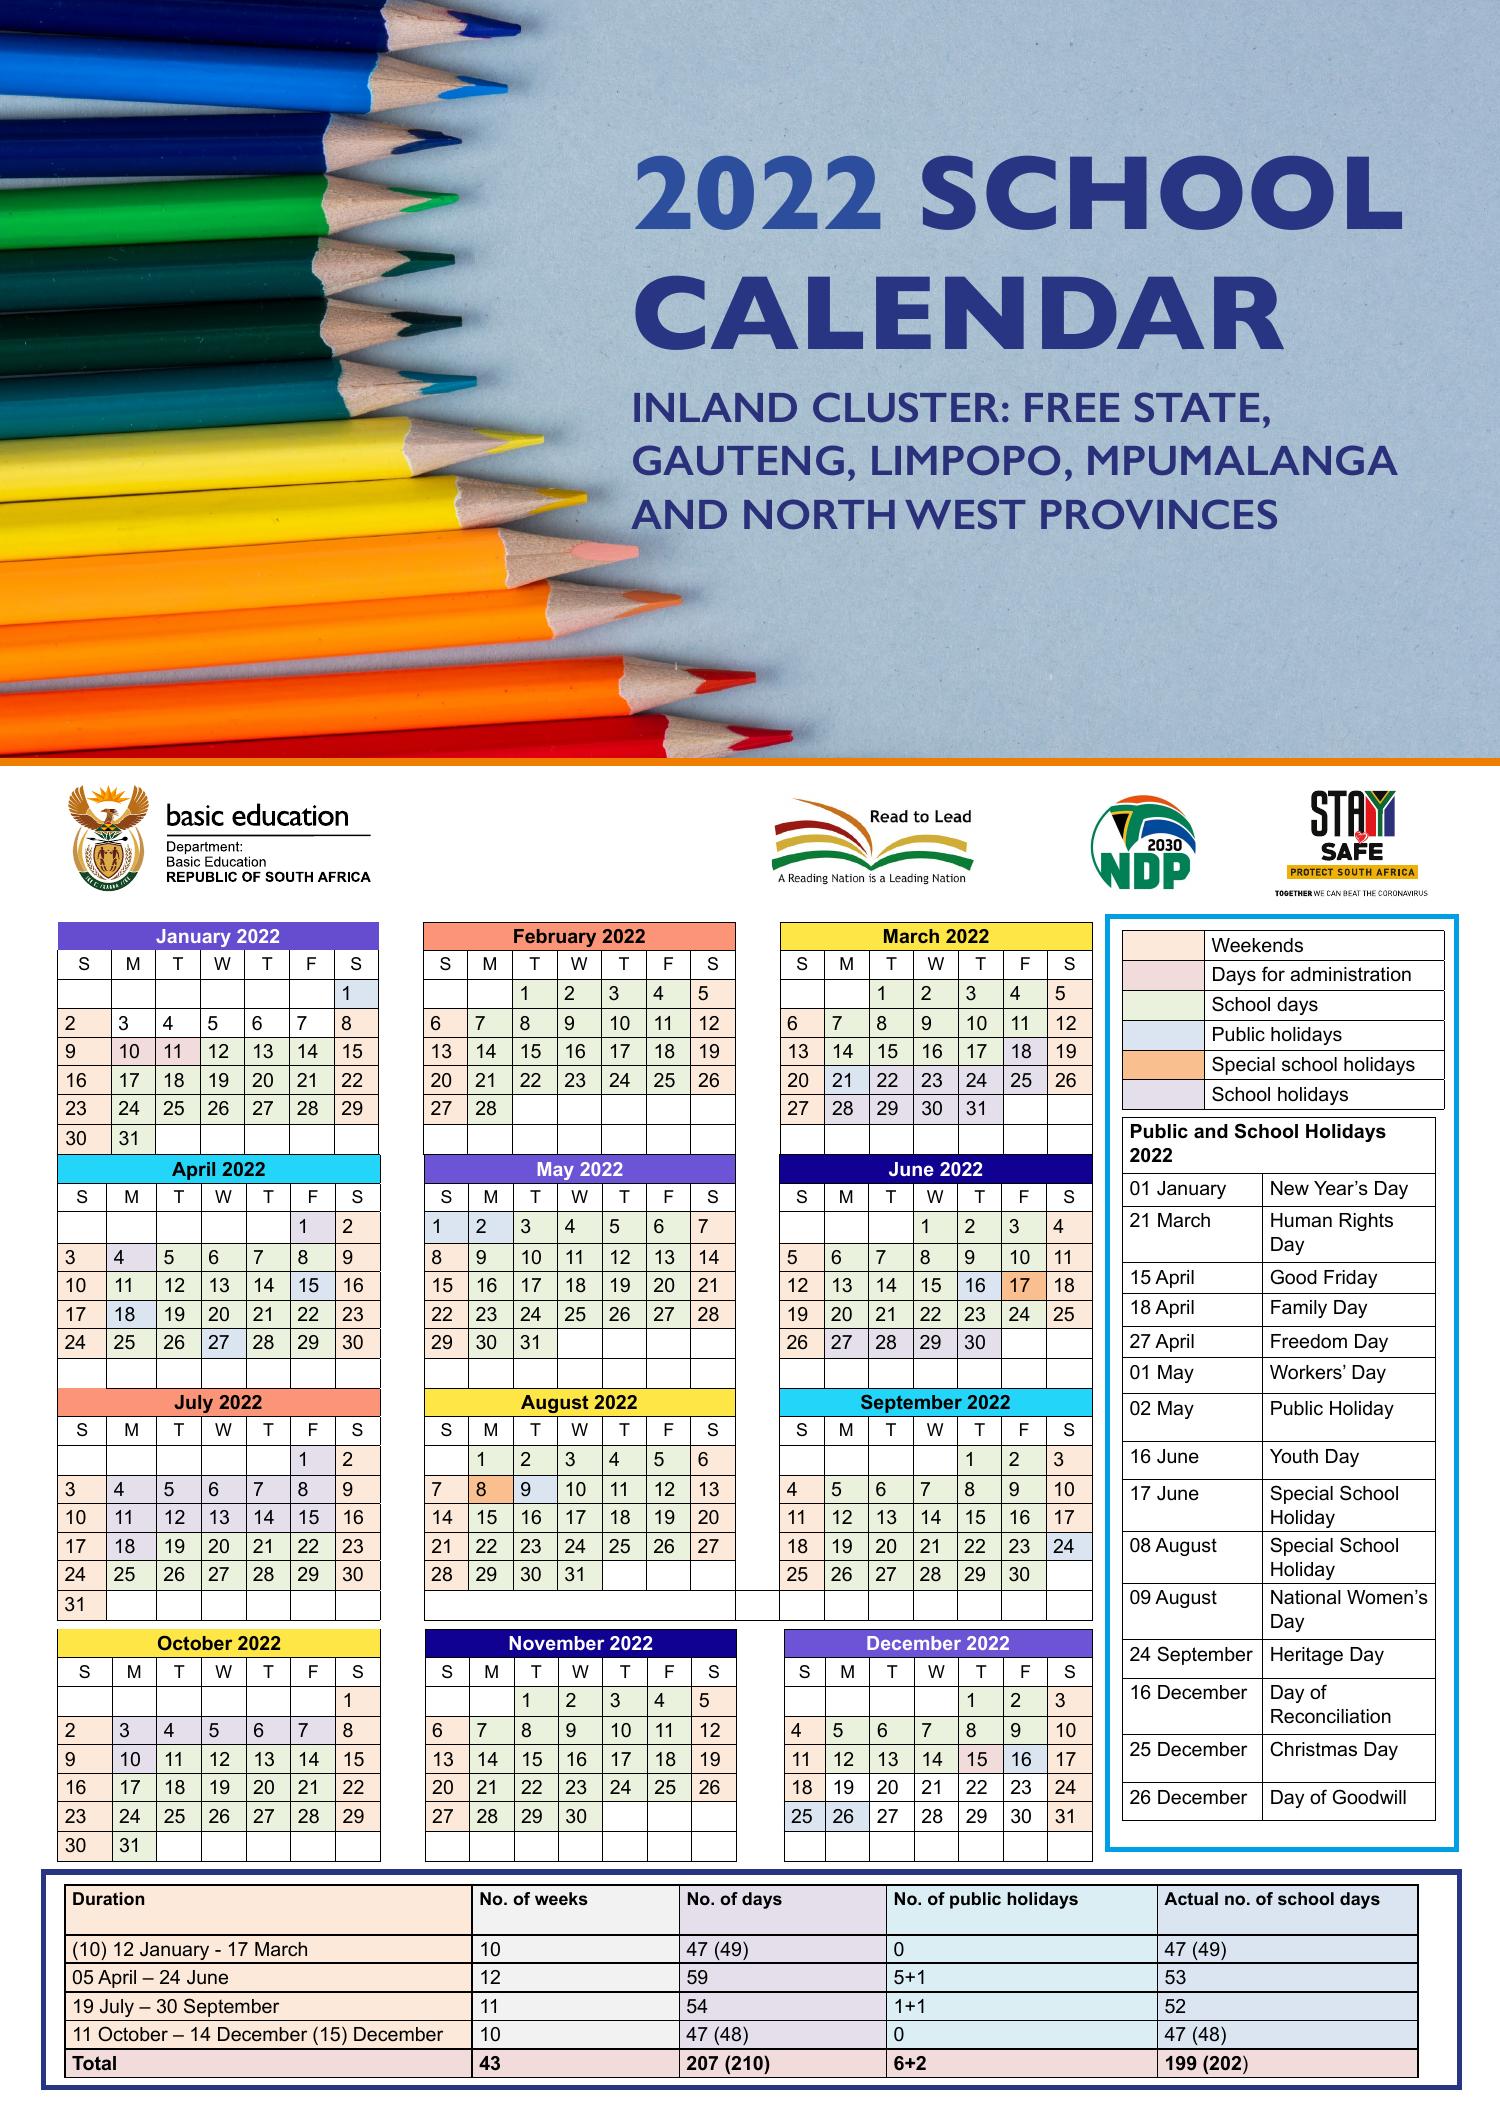 2022 School Calendar Gazette.pdf | Docdroid